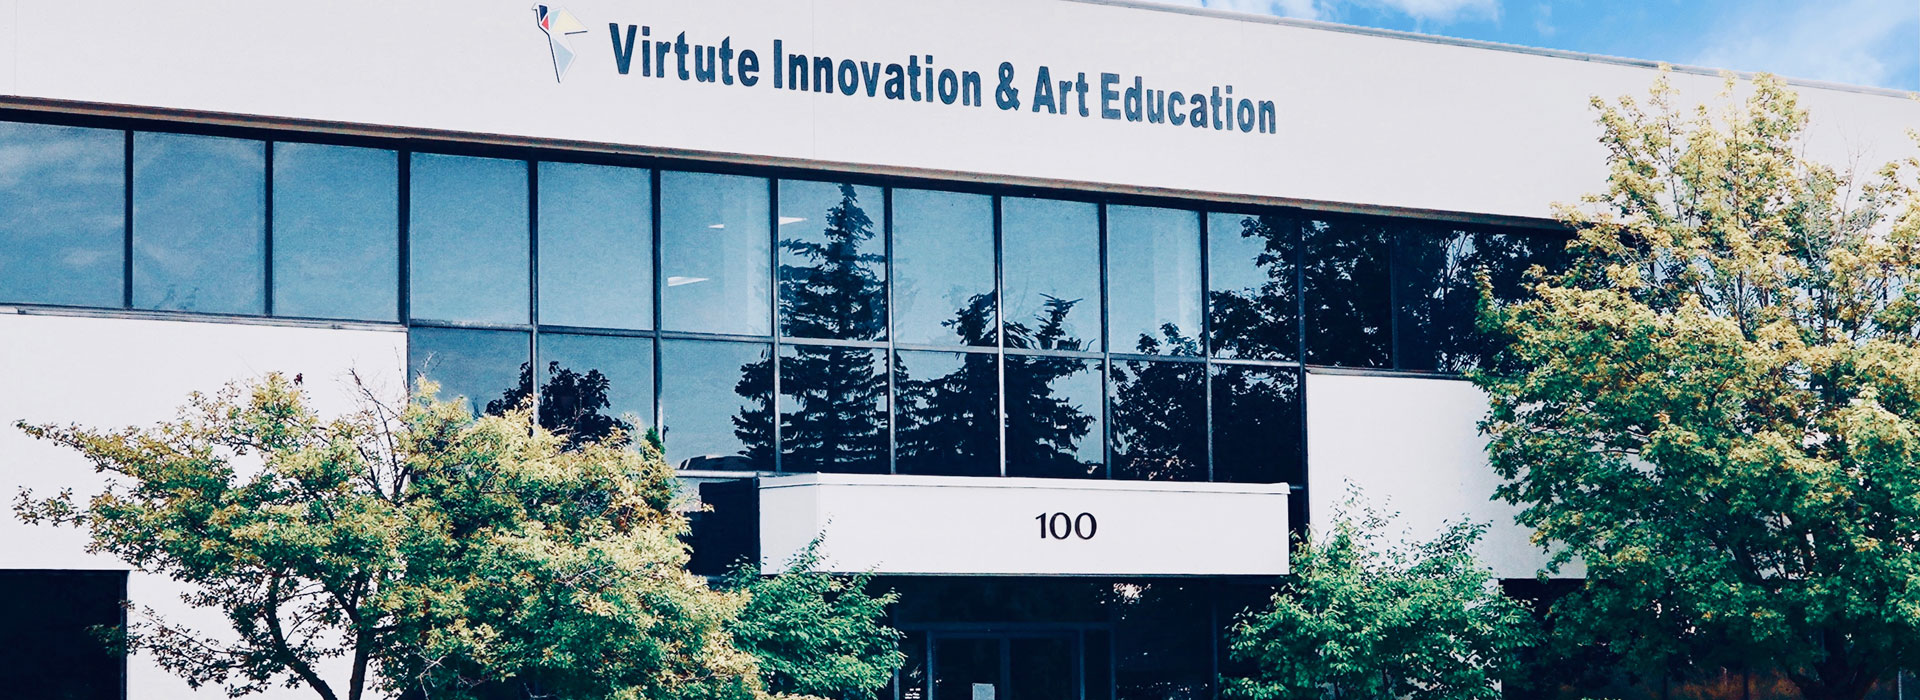 Virtute Innovation & Art Education